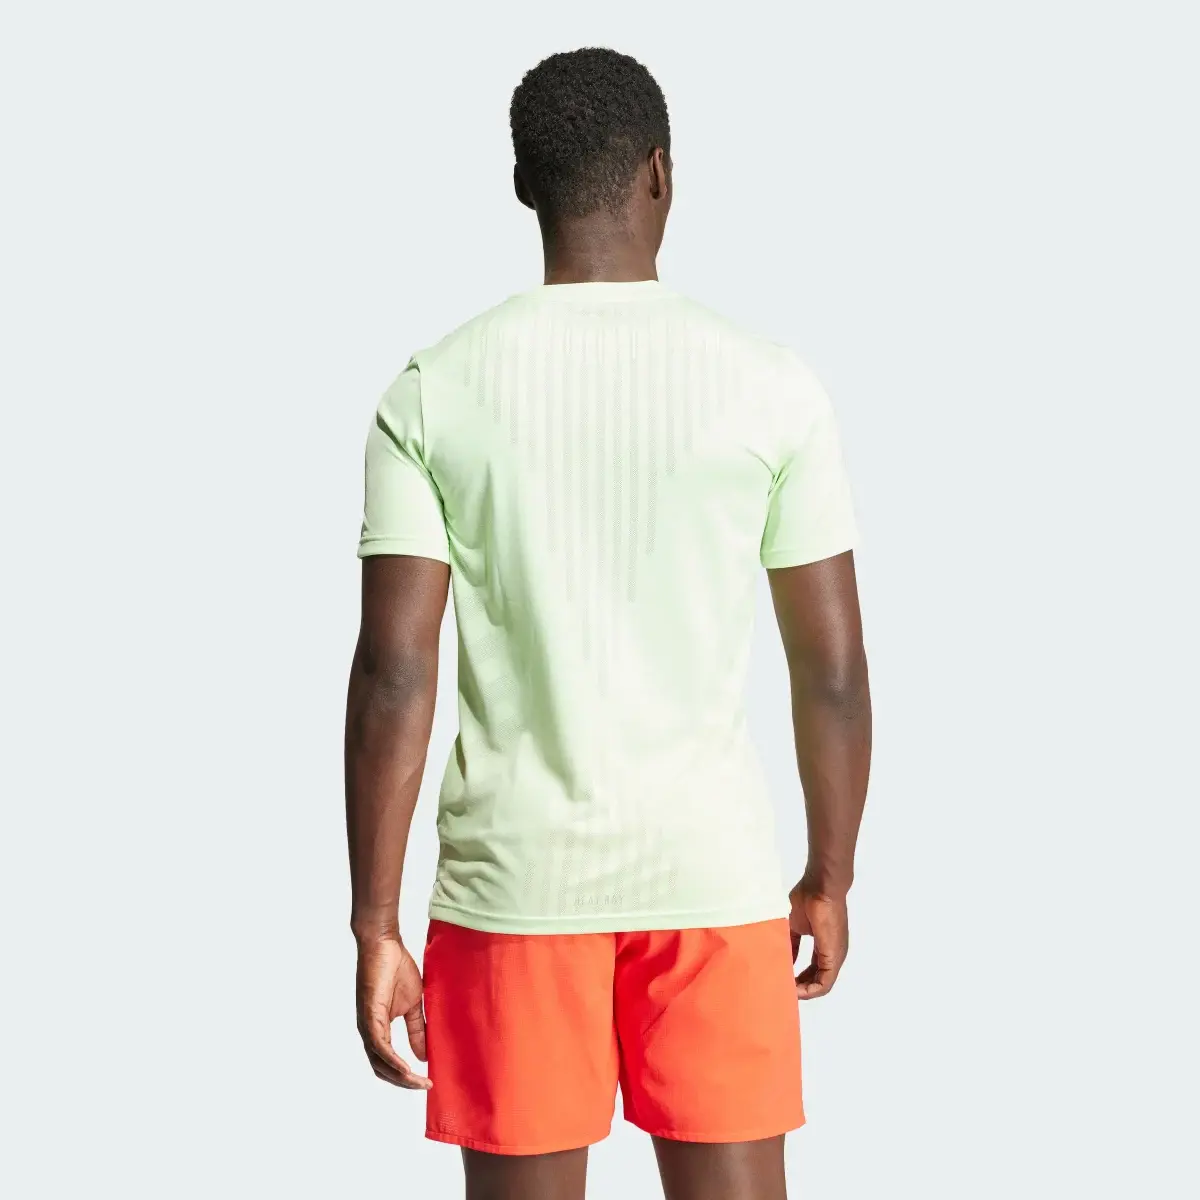 Adidas T-shirt HIIT Airchill Workout. 3